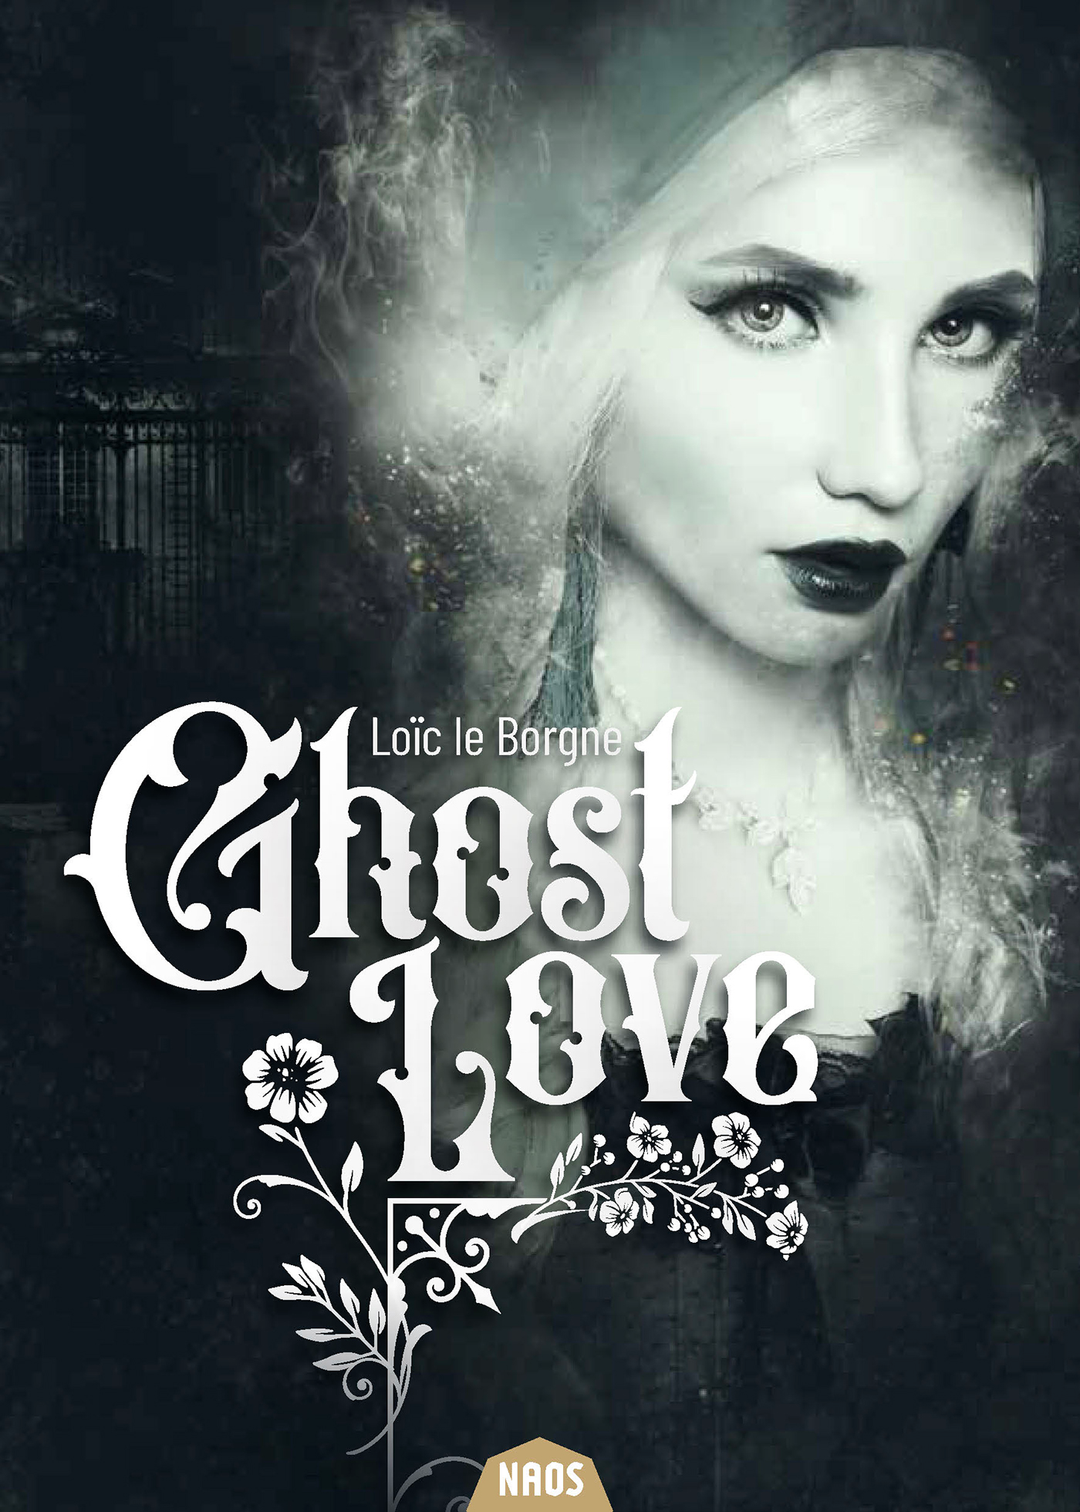 Ghost Love